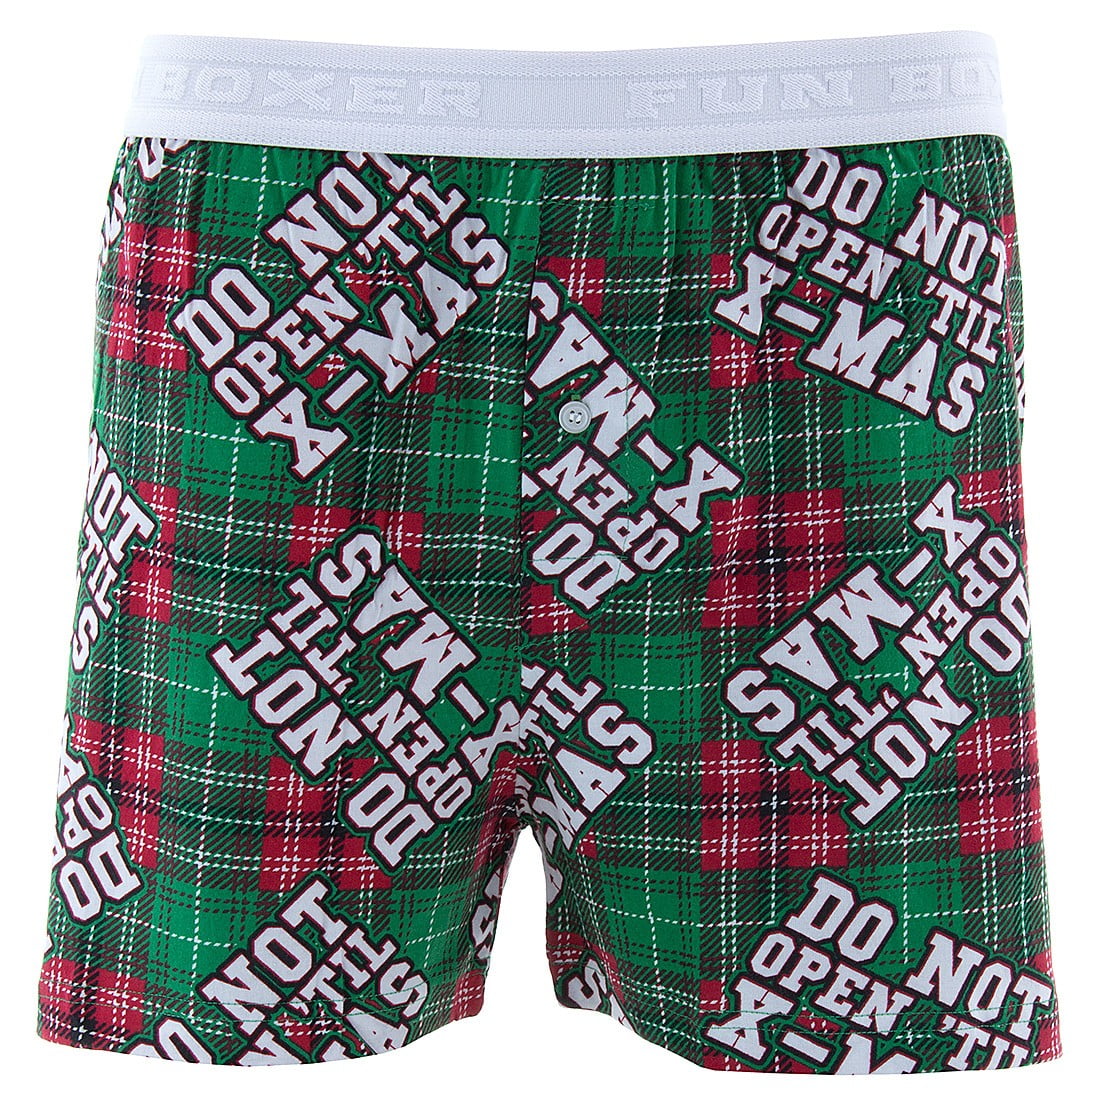 Fun Boxers Men's Do Not Open Green Cotton Boxer Shorts - Walmart.com